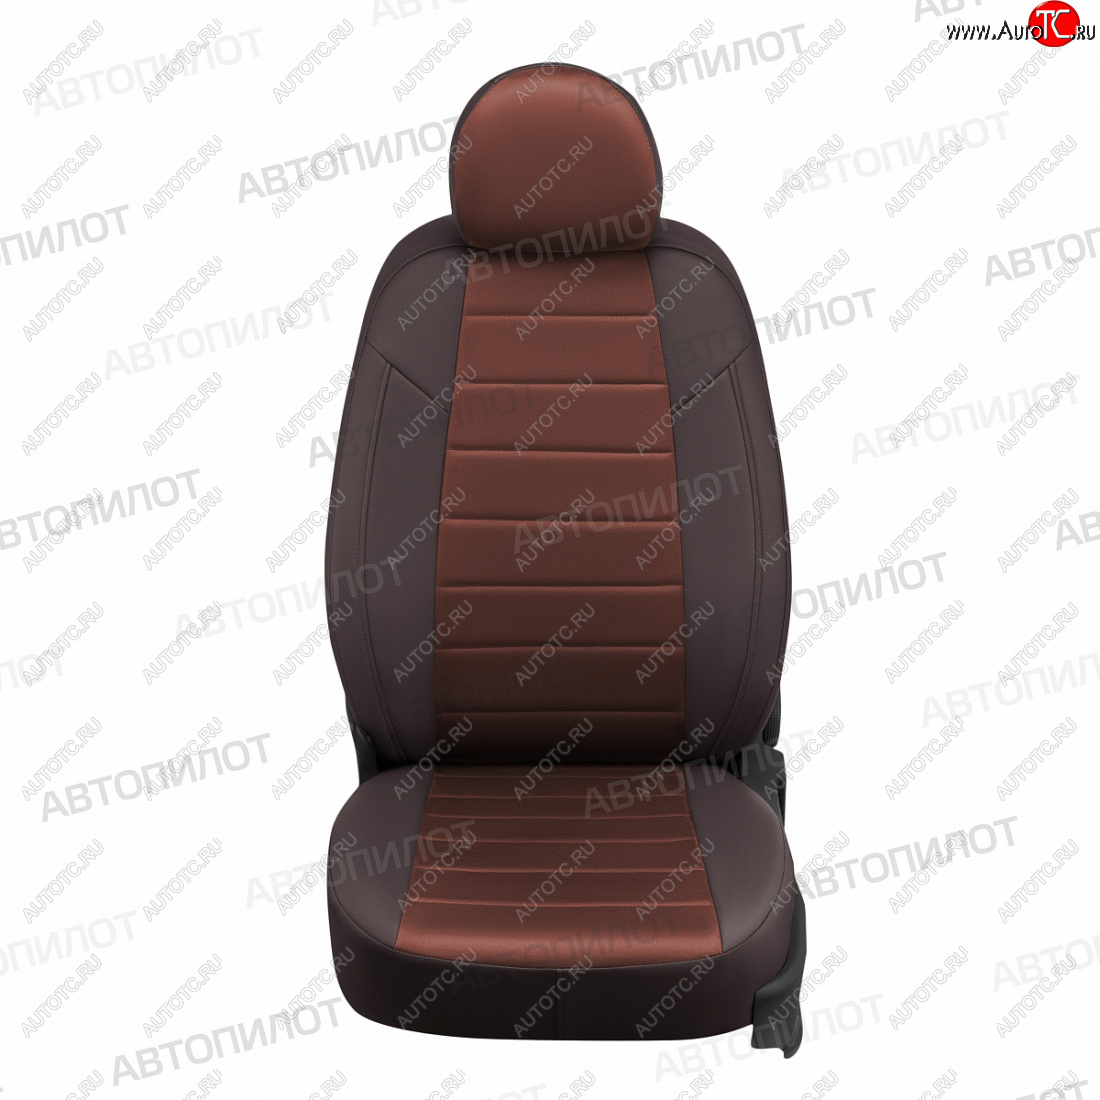 13 449 р. Чехлы сидений (экокожа/алькантара) Автопилот  Great Wall Hover H5 (2010-2017) (шоколад)